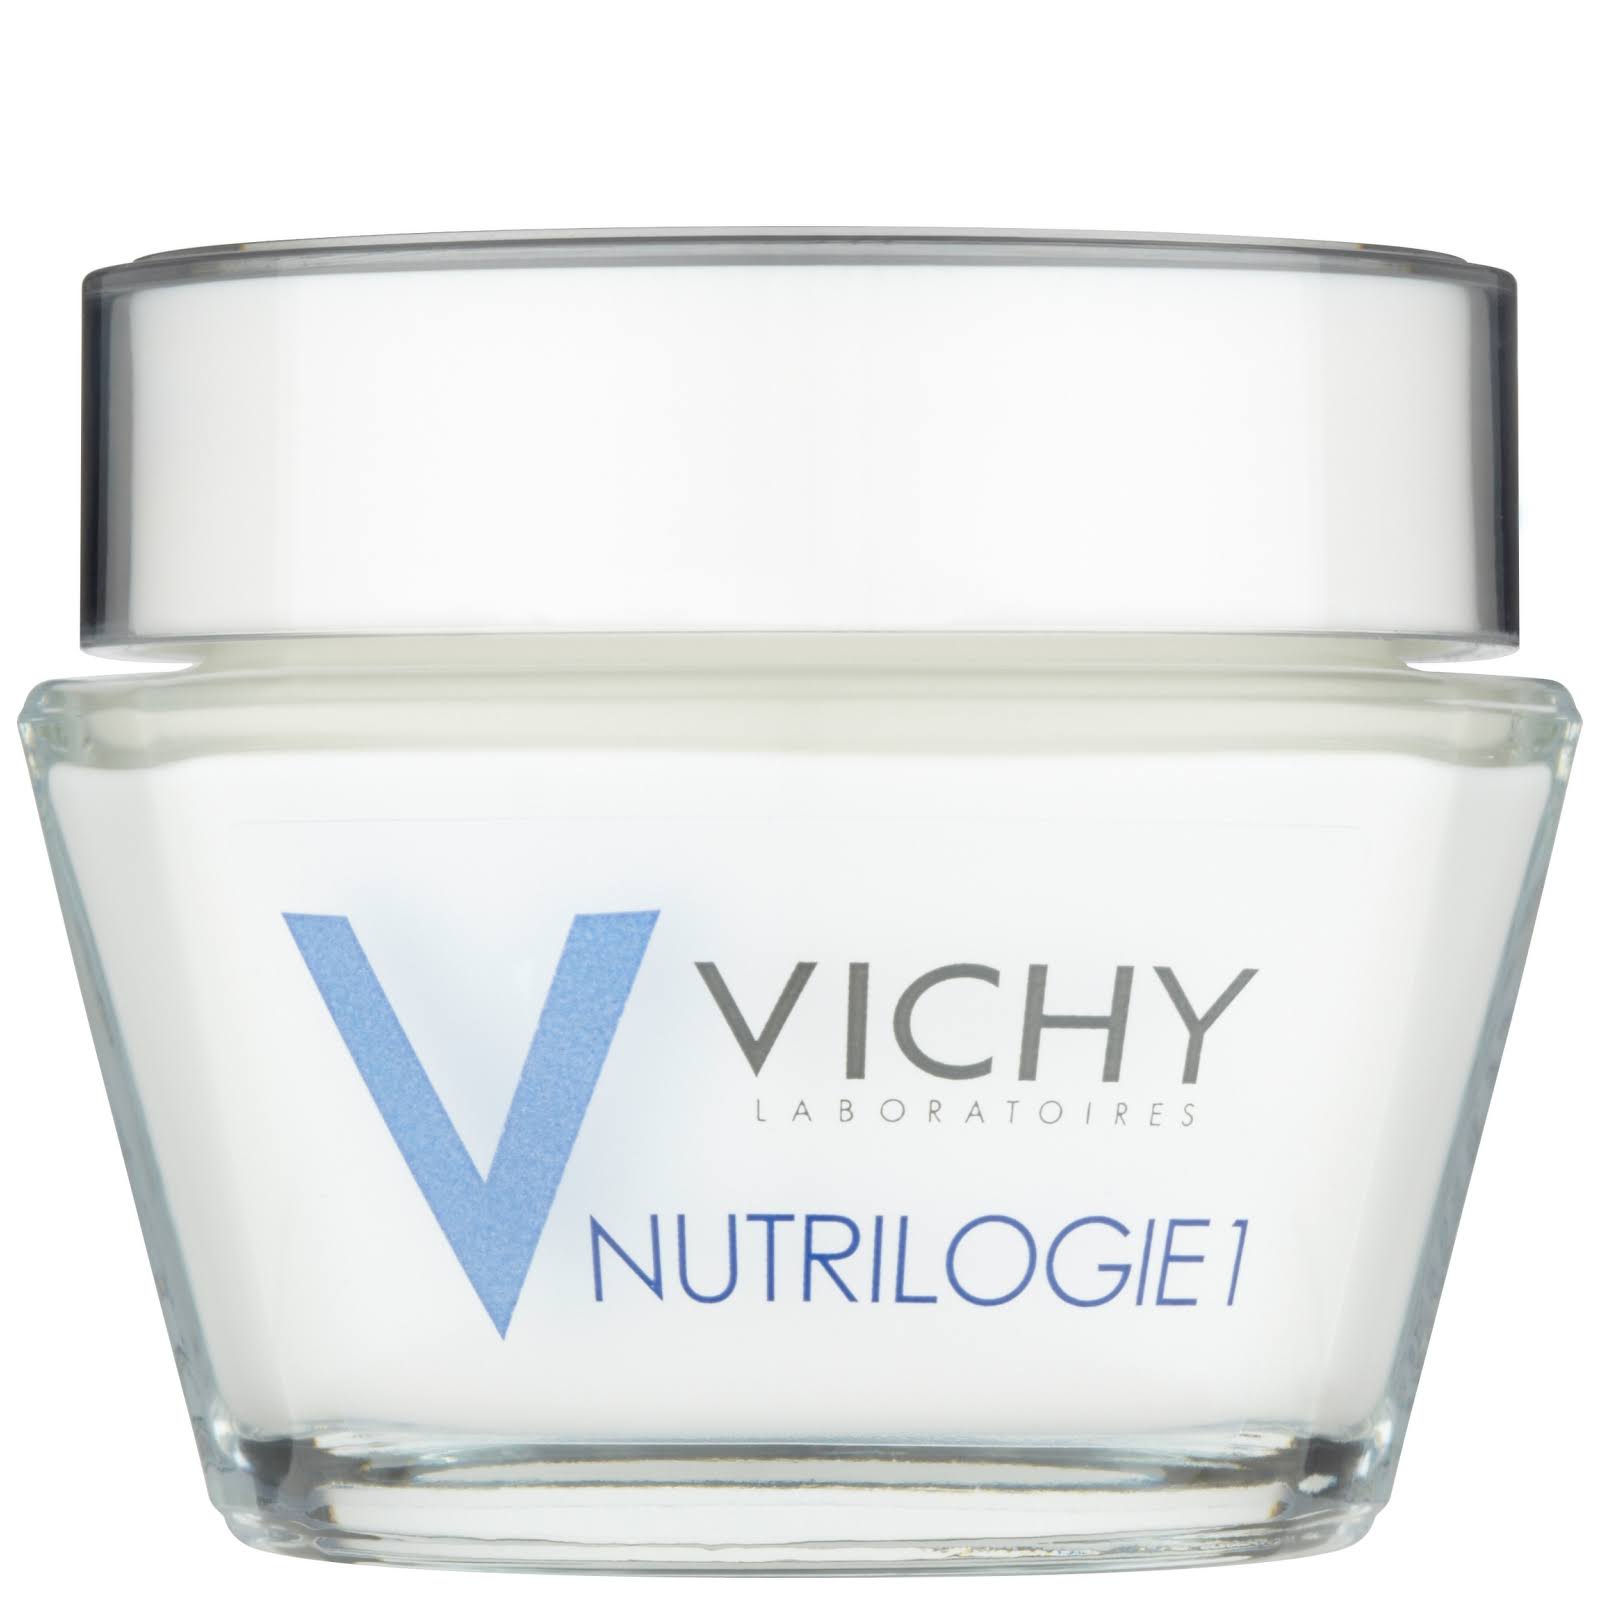 Vichy Nutrilogie 1 Intense Skin Care - Dry Skin, 50ml